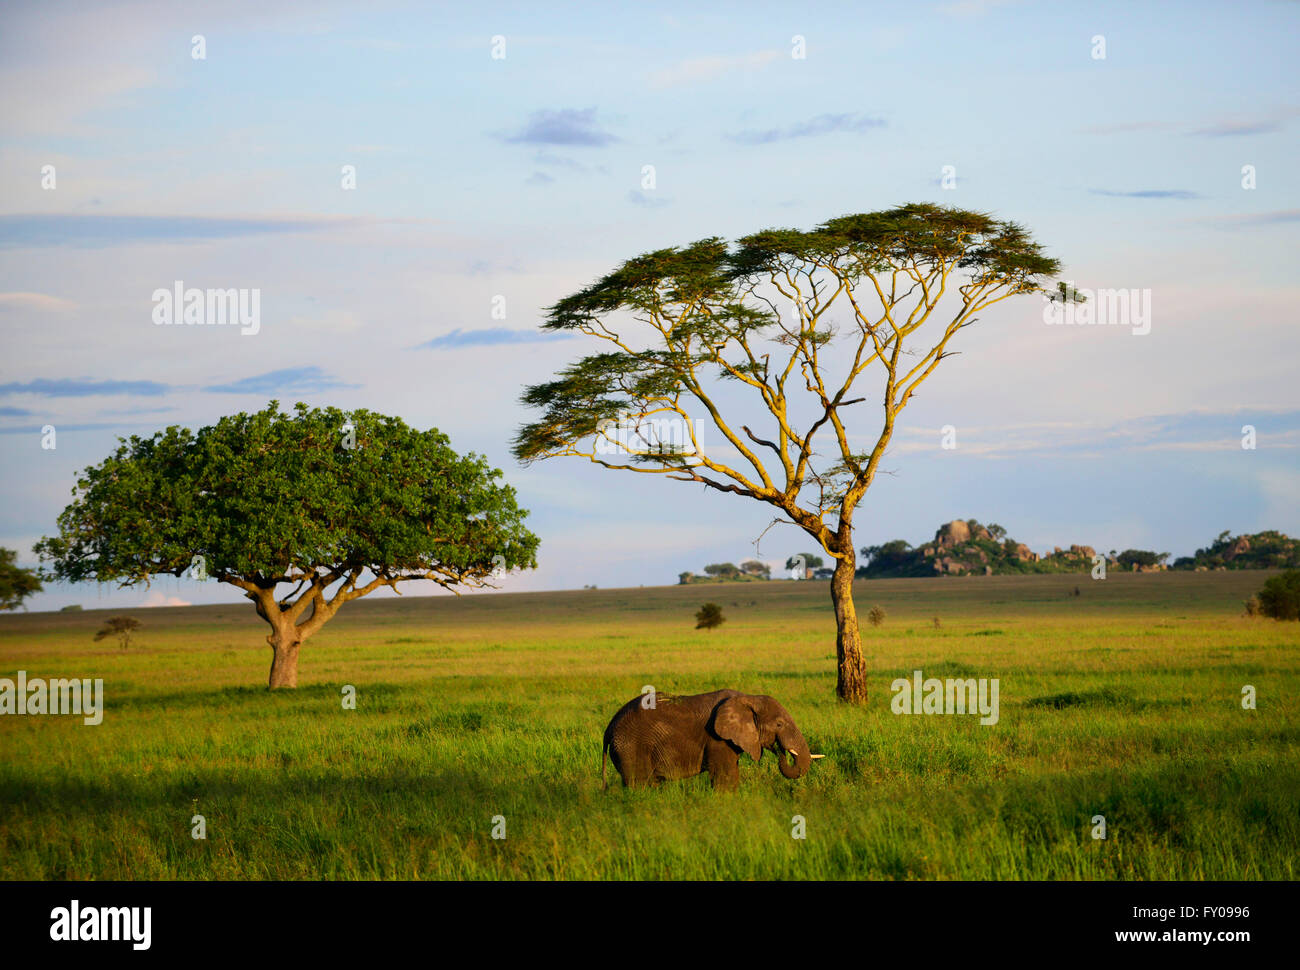 A female elephant grazing, Serengeti National Park, Tanzania. Stock Photo